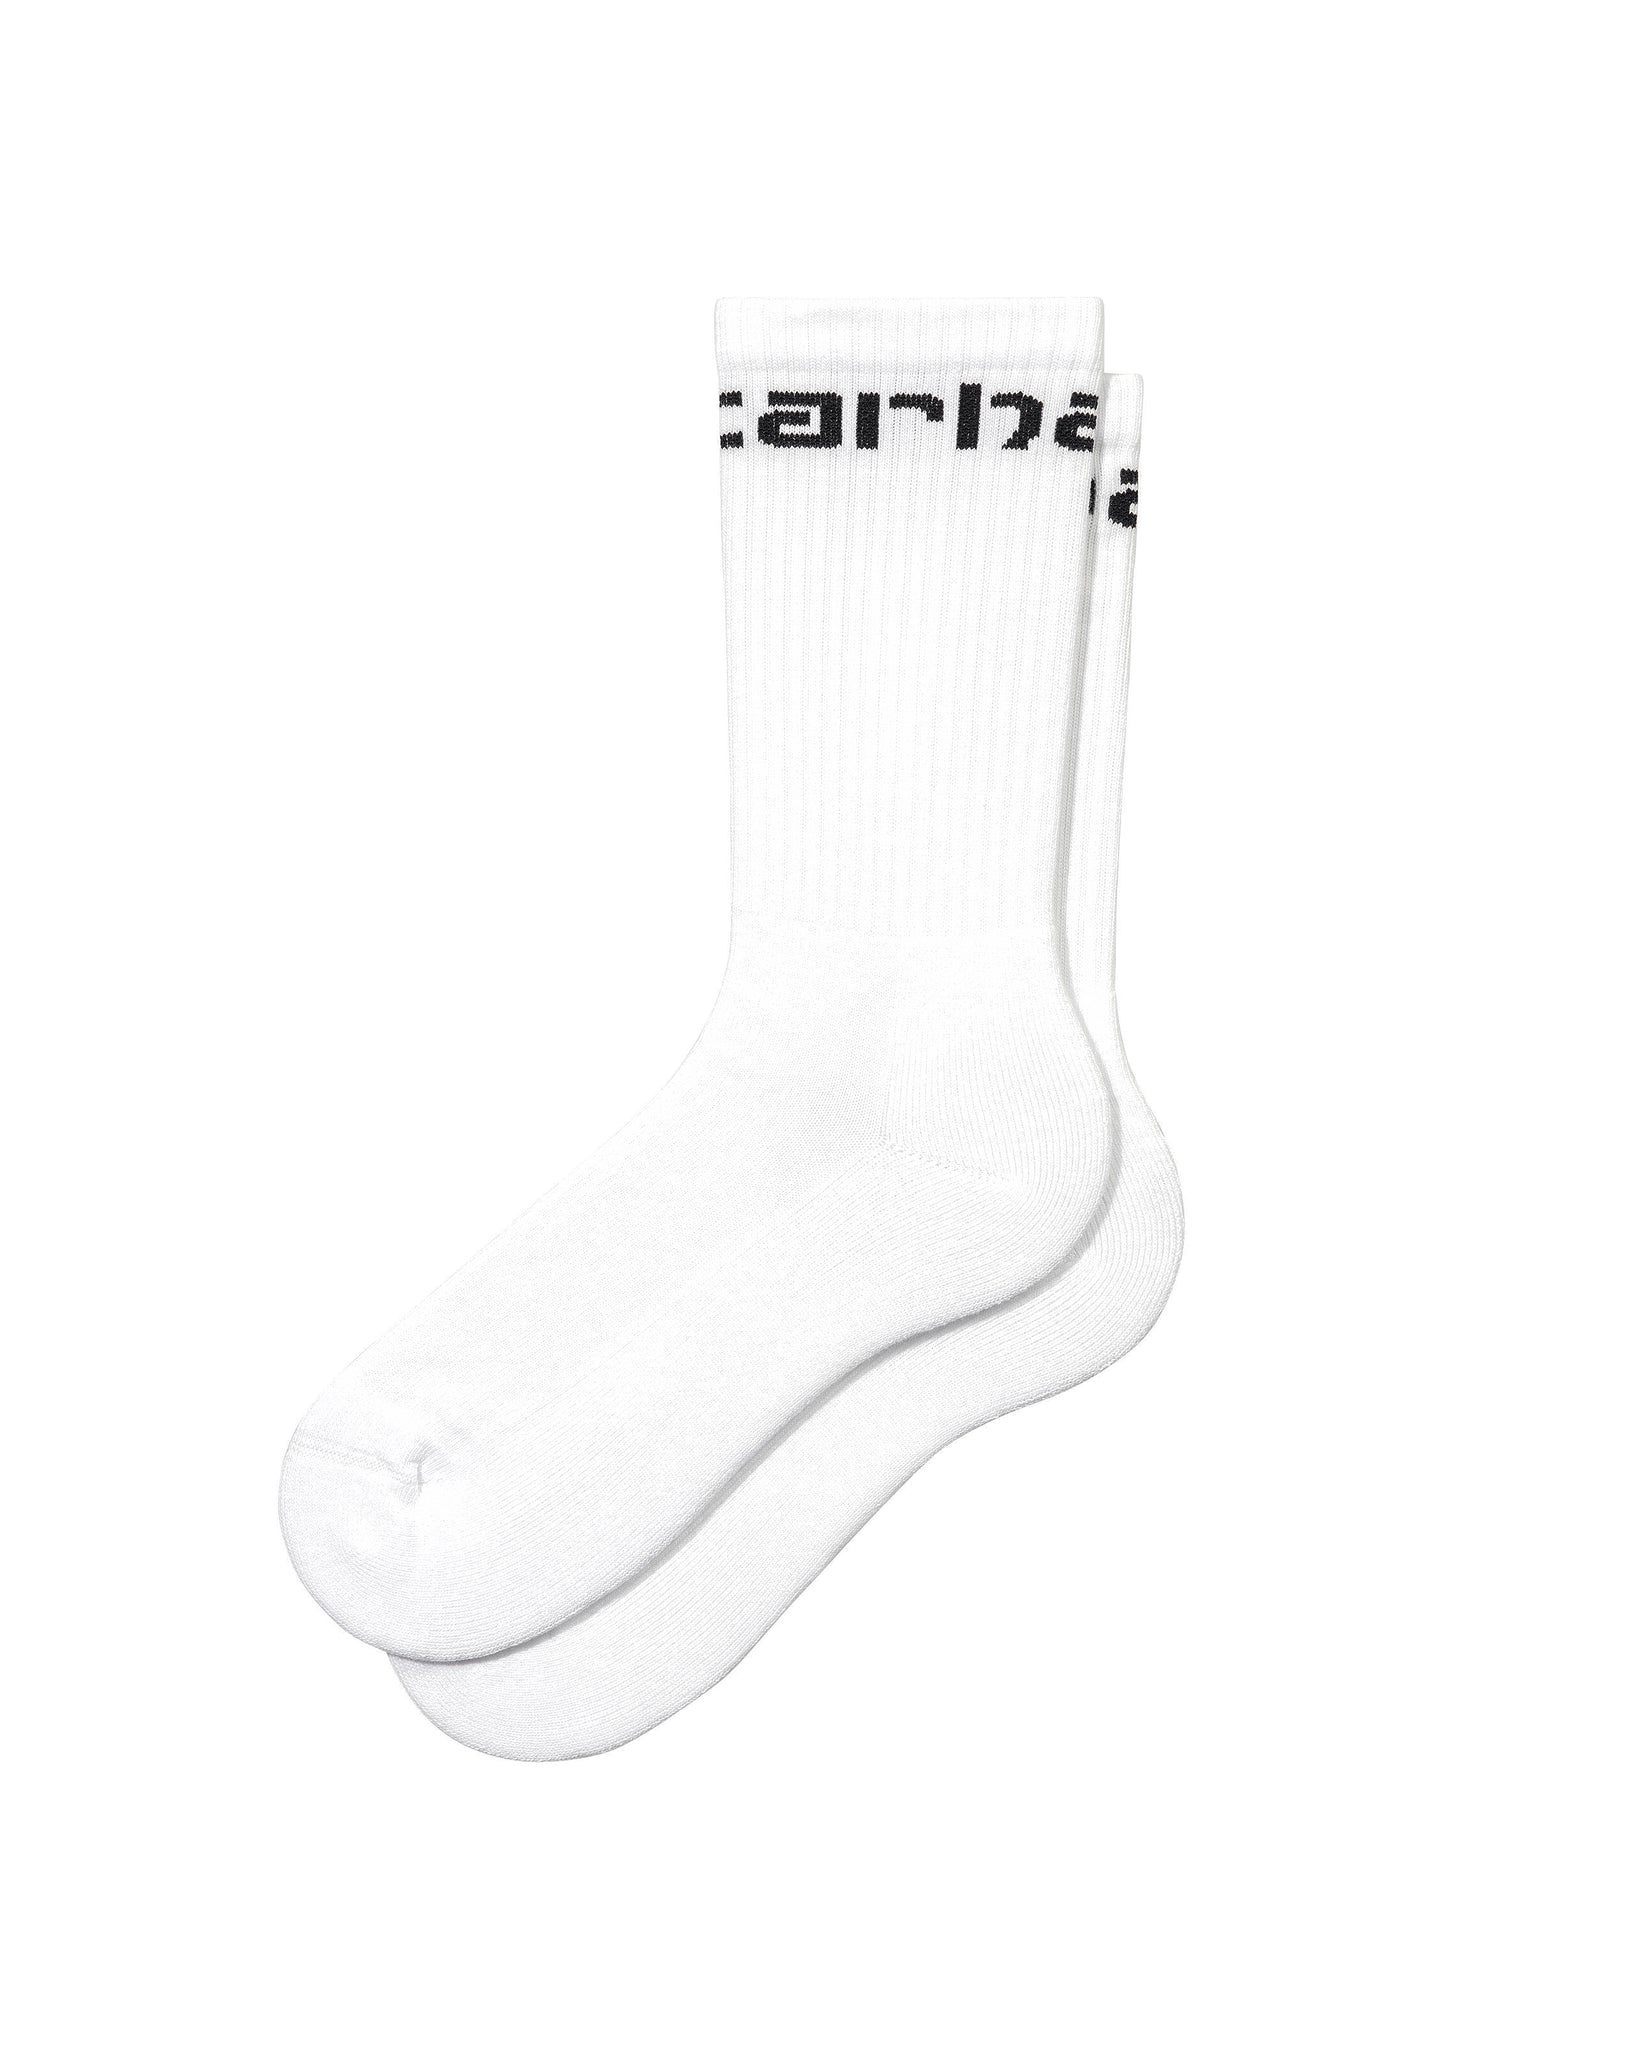 Carhartt socks - Blanco/Negro